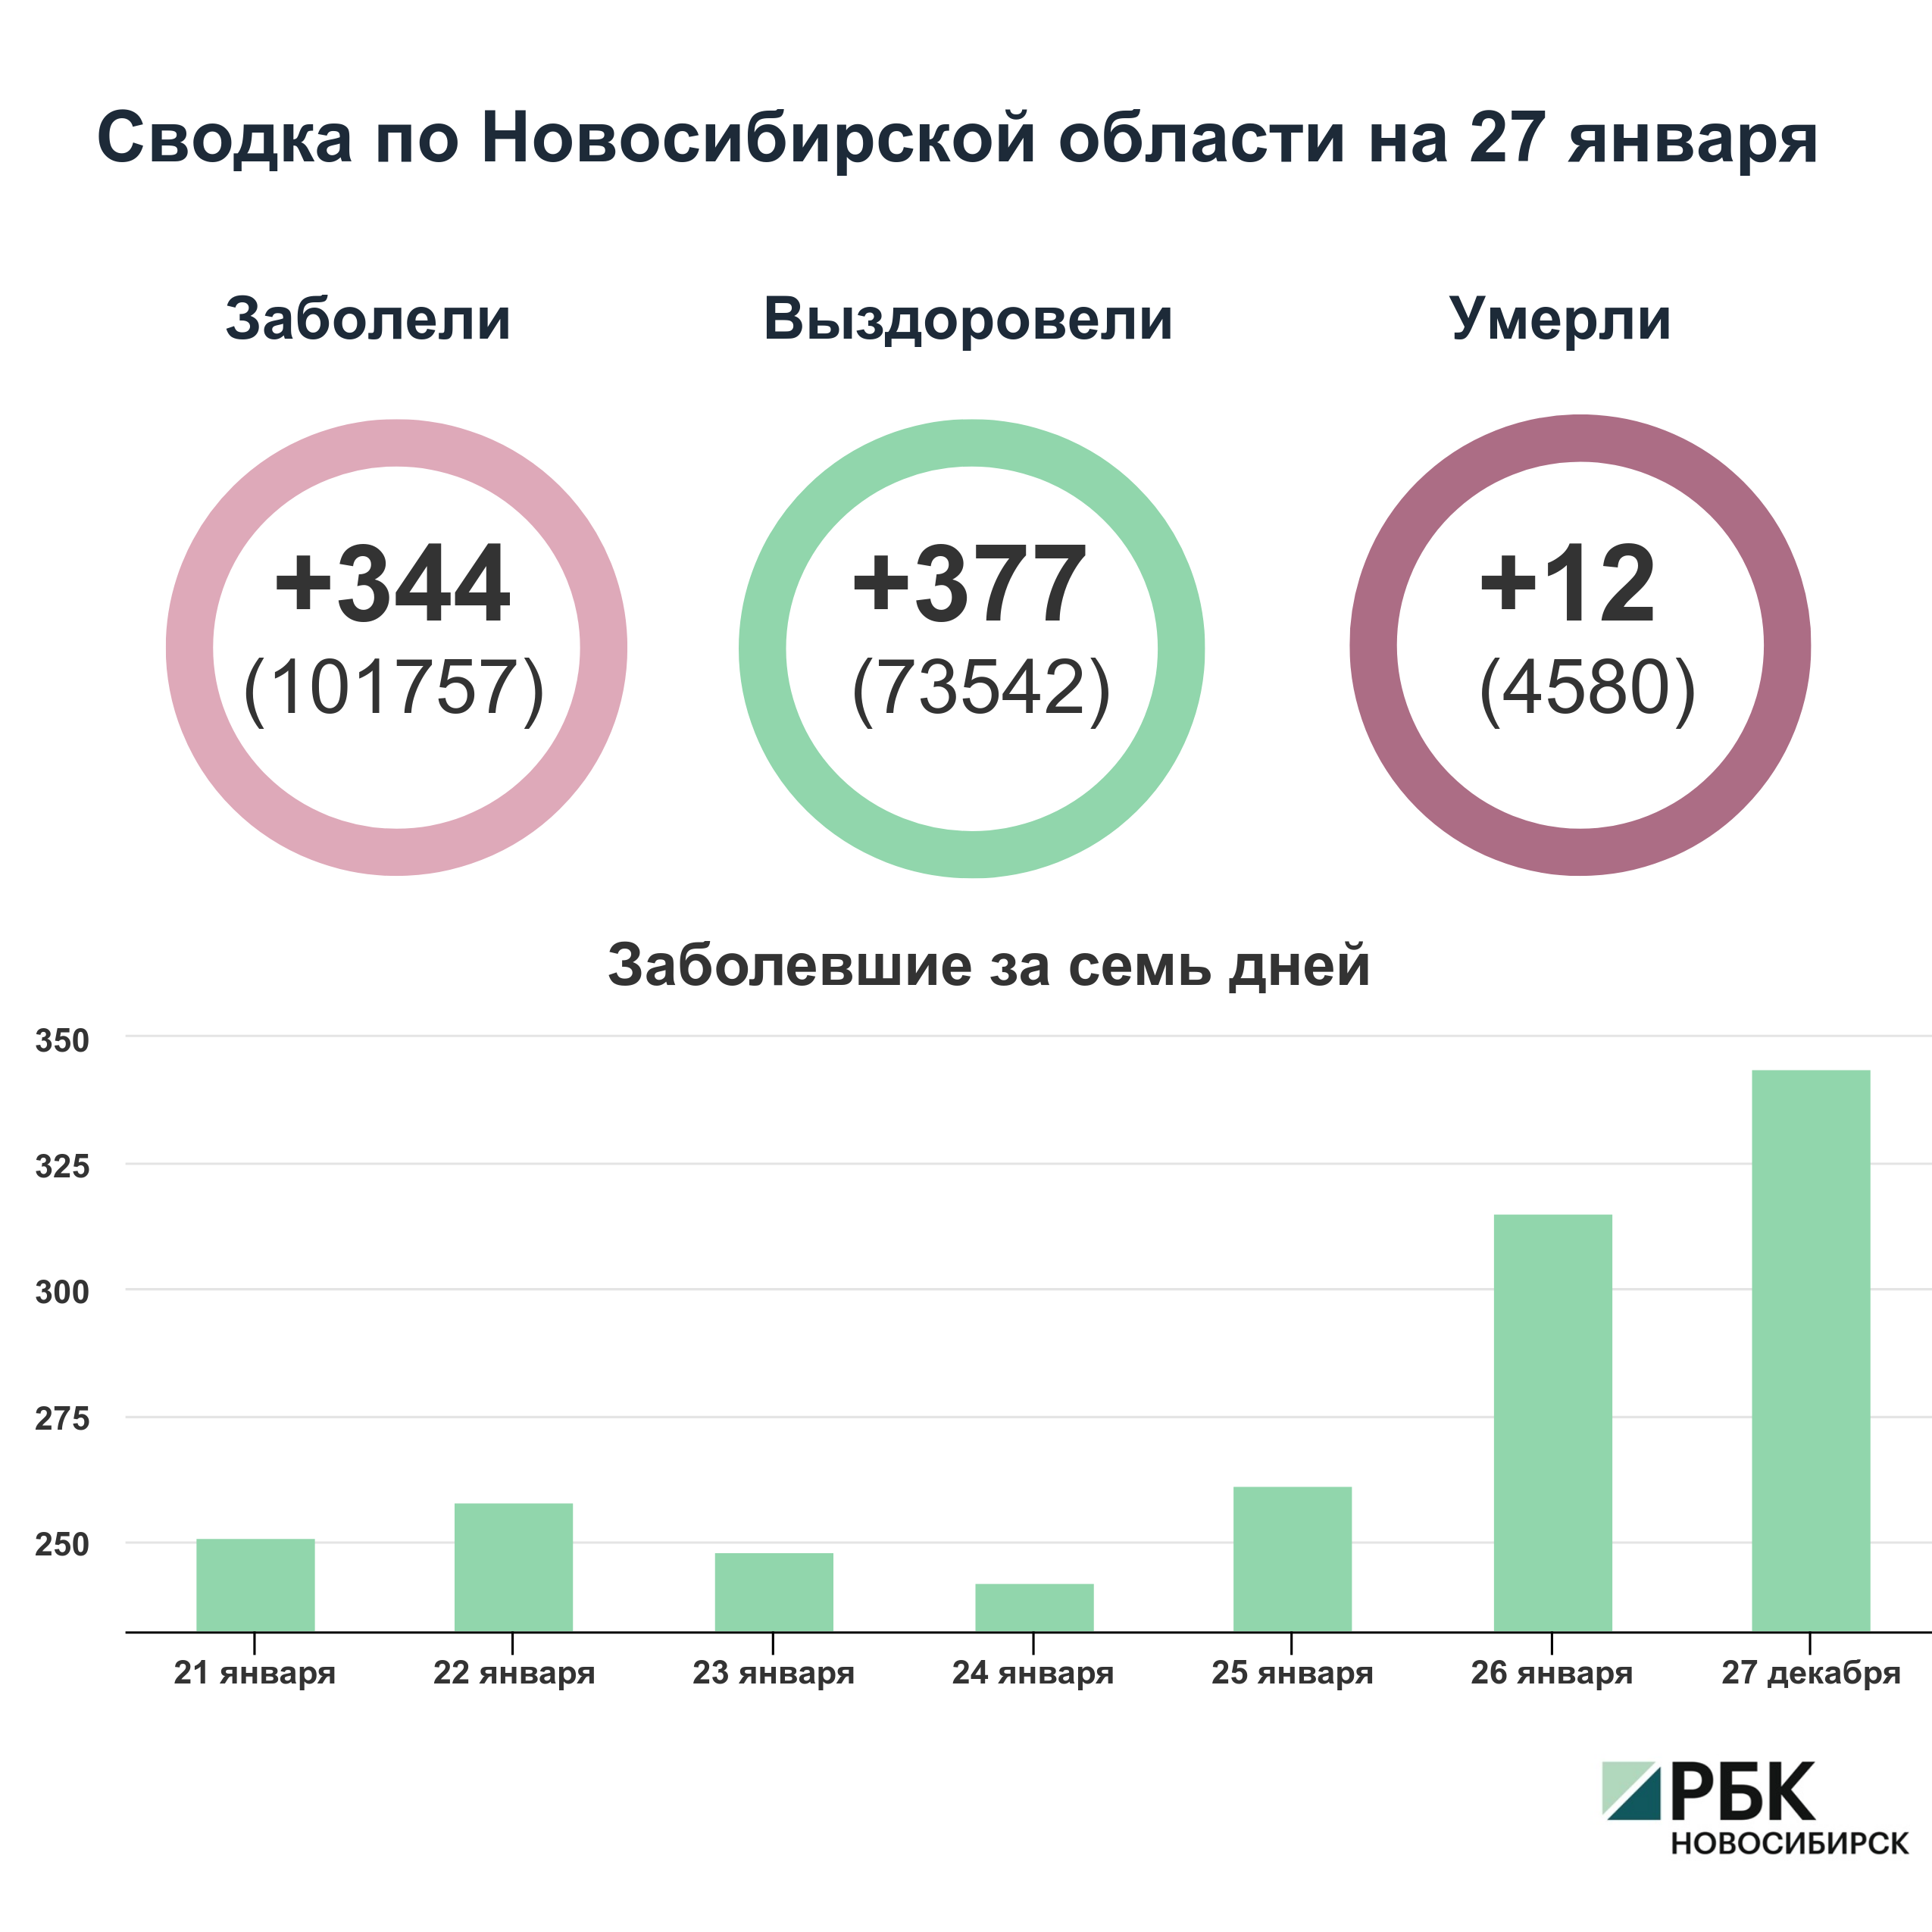 Коронавирус в Новосибирске: сводка на 27 января